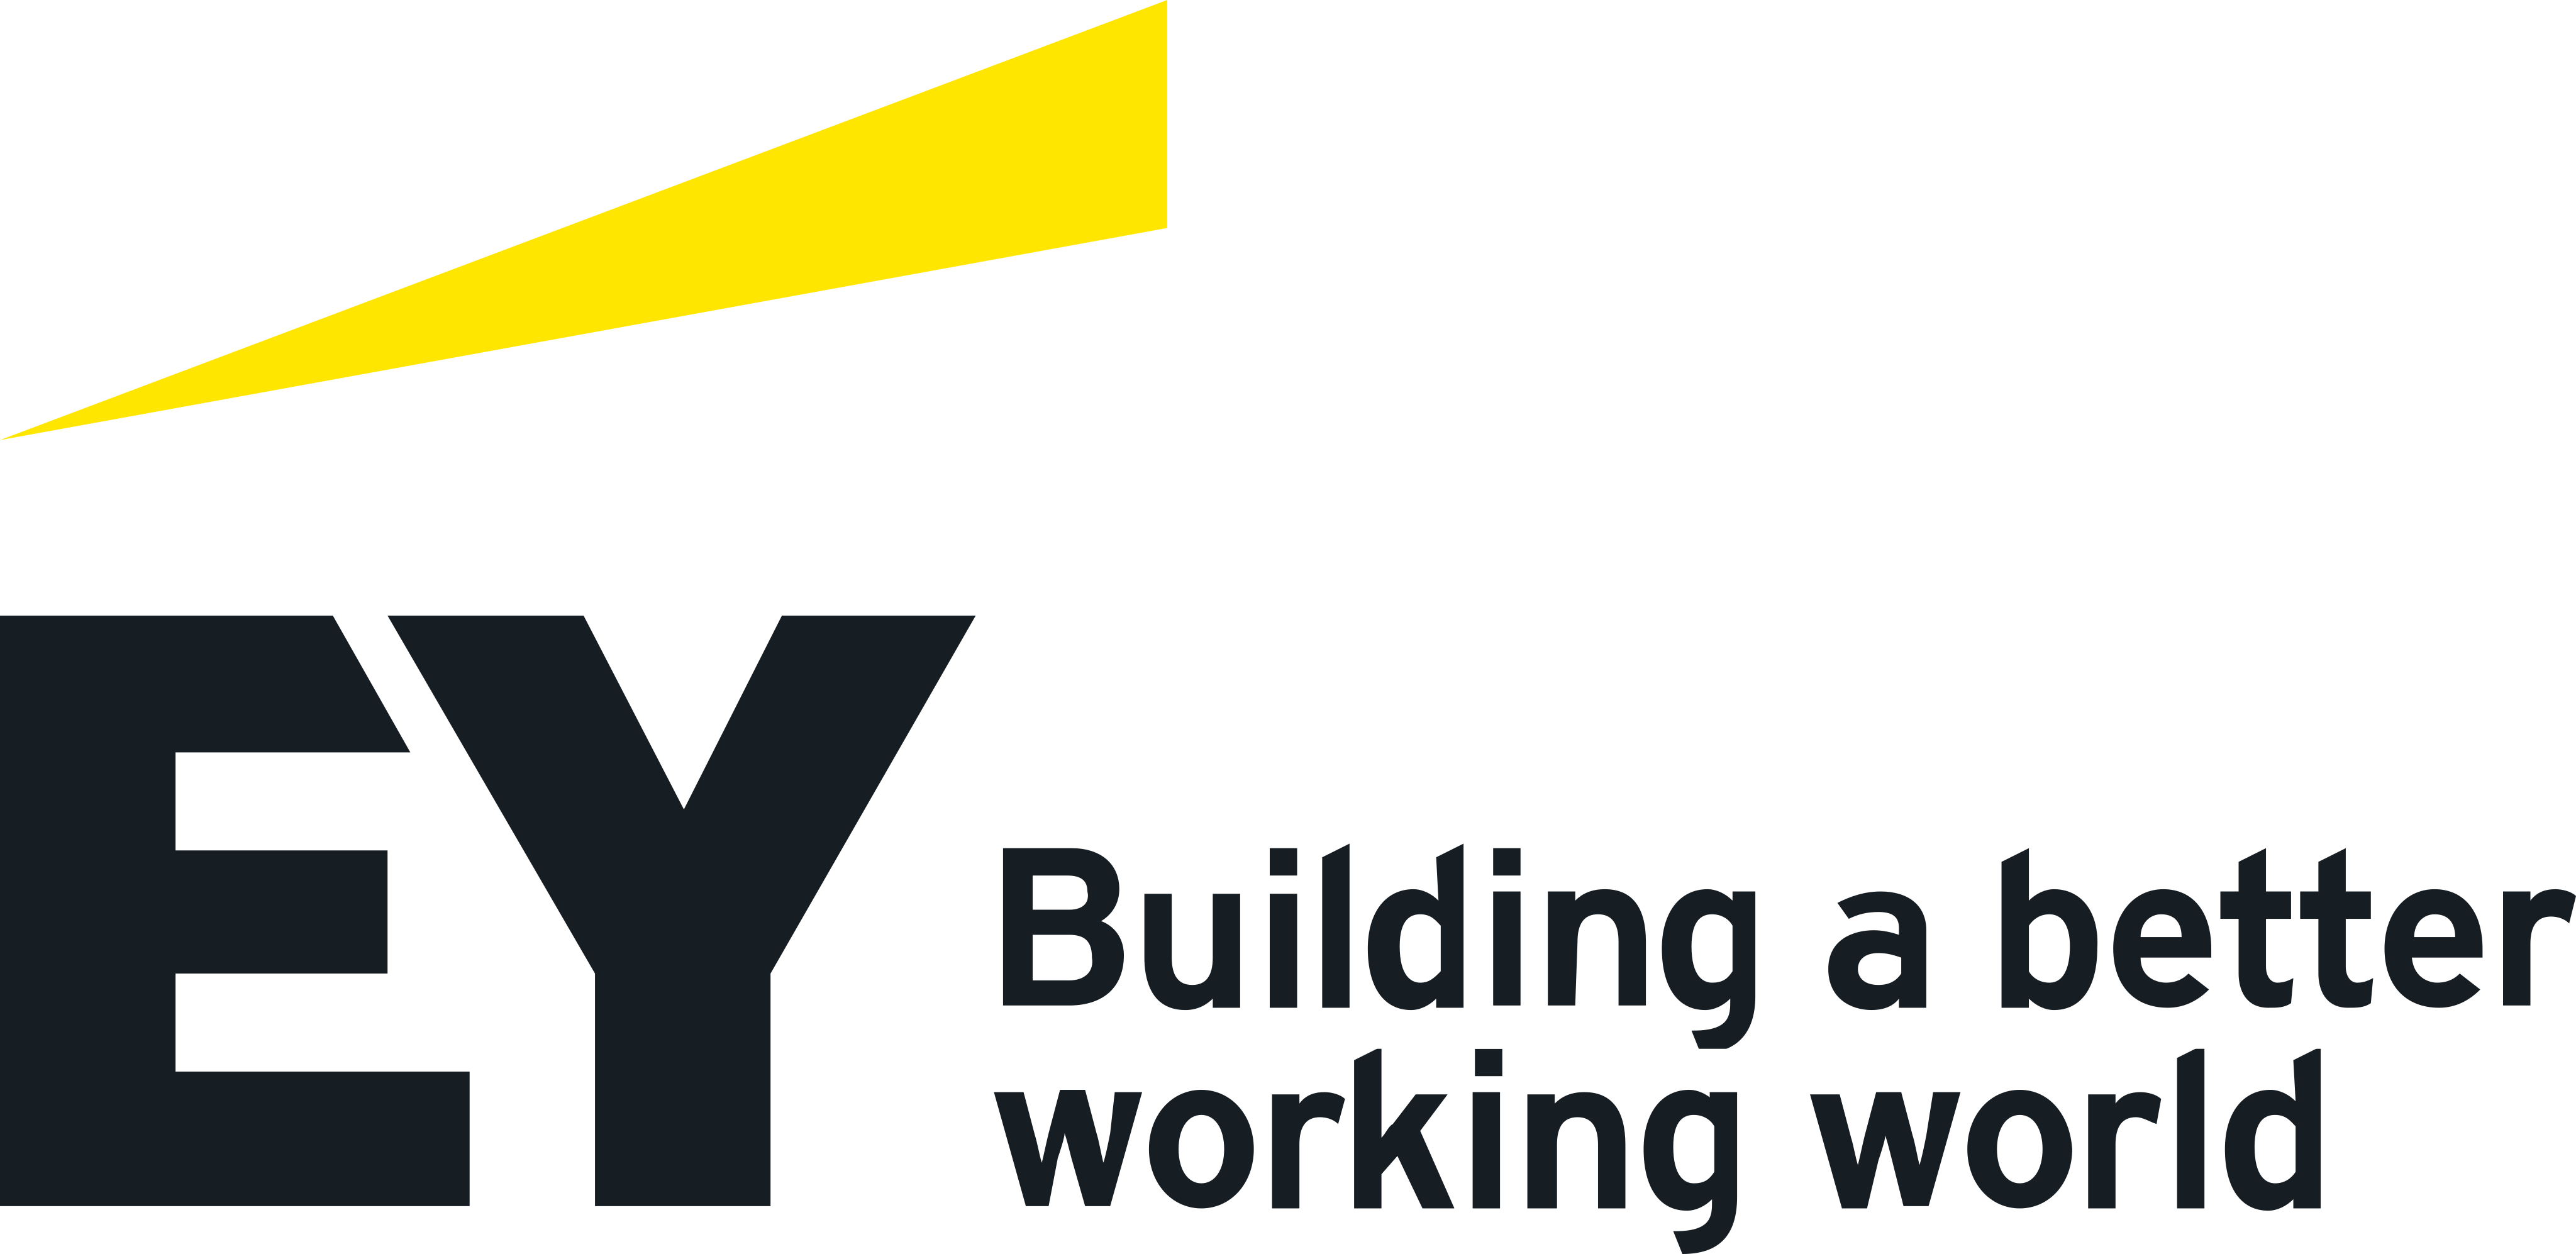 ernst-young-logo